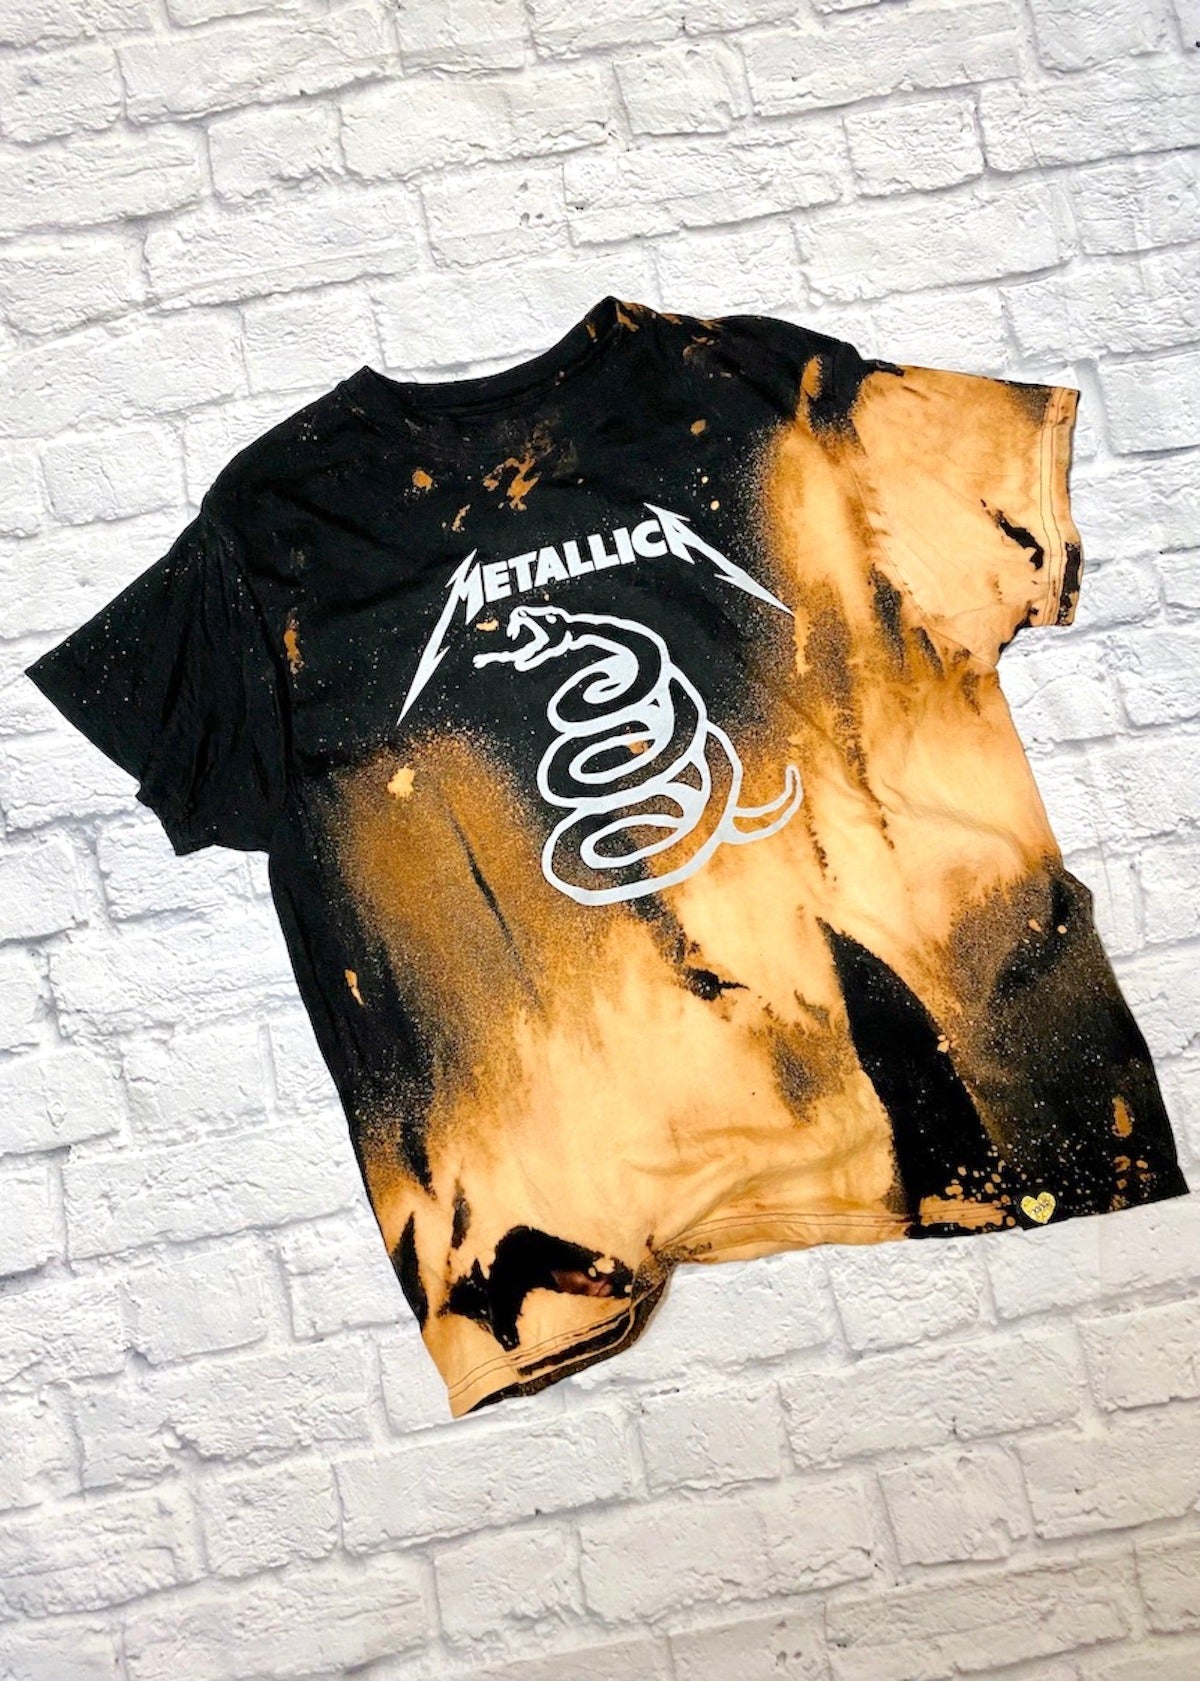 Metallica Logo Bleach Dye T Shirt Reputation NYC